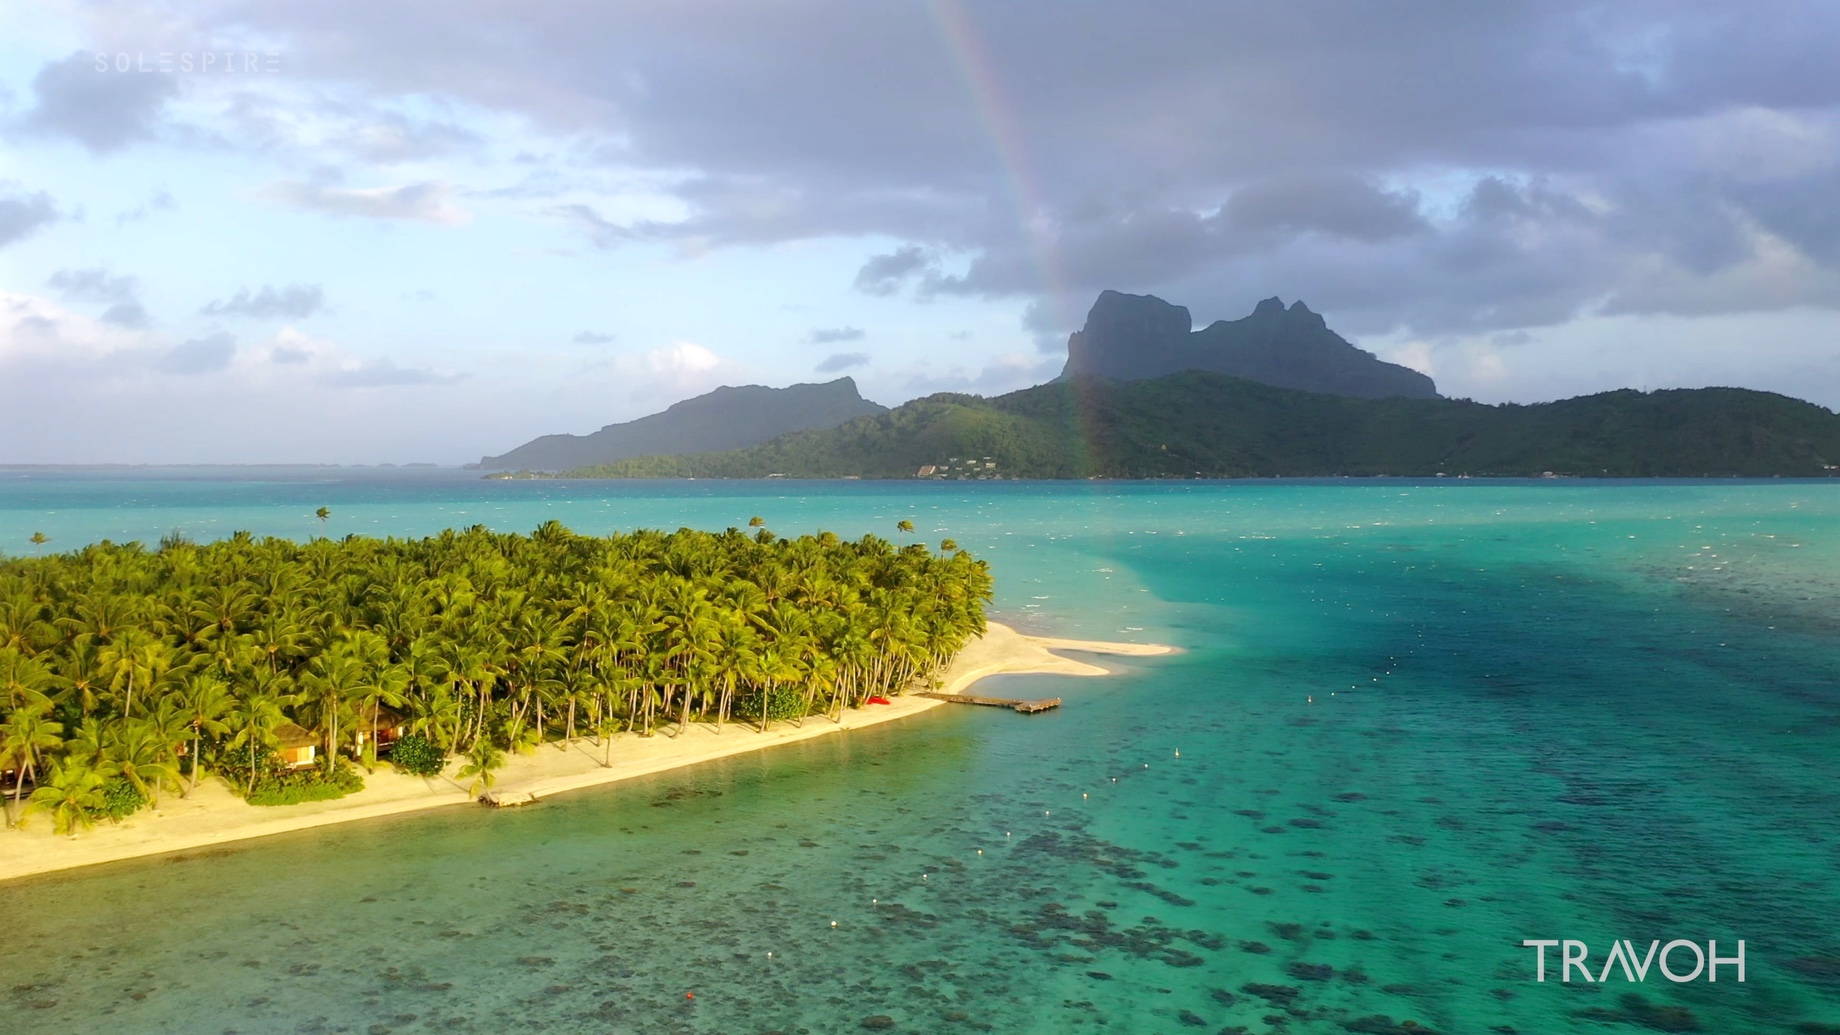 Peaceful South Pacific Drone Views - Motu Tane Island - Bora Bora, French Polynesia - 4K Travel Video